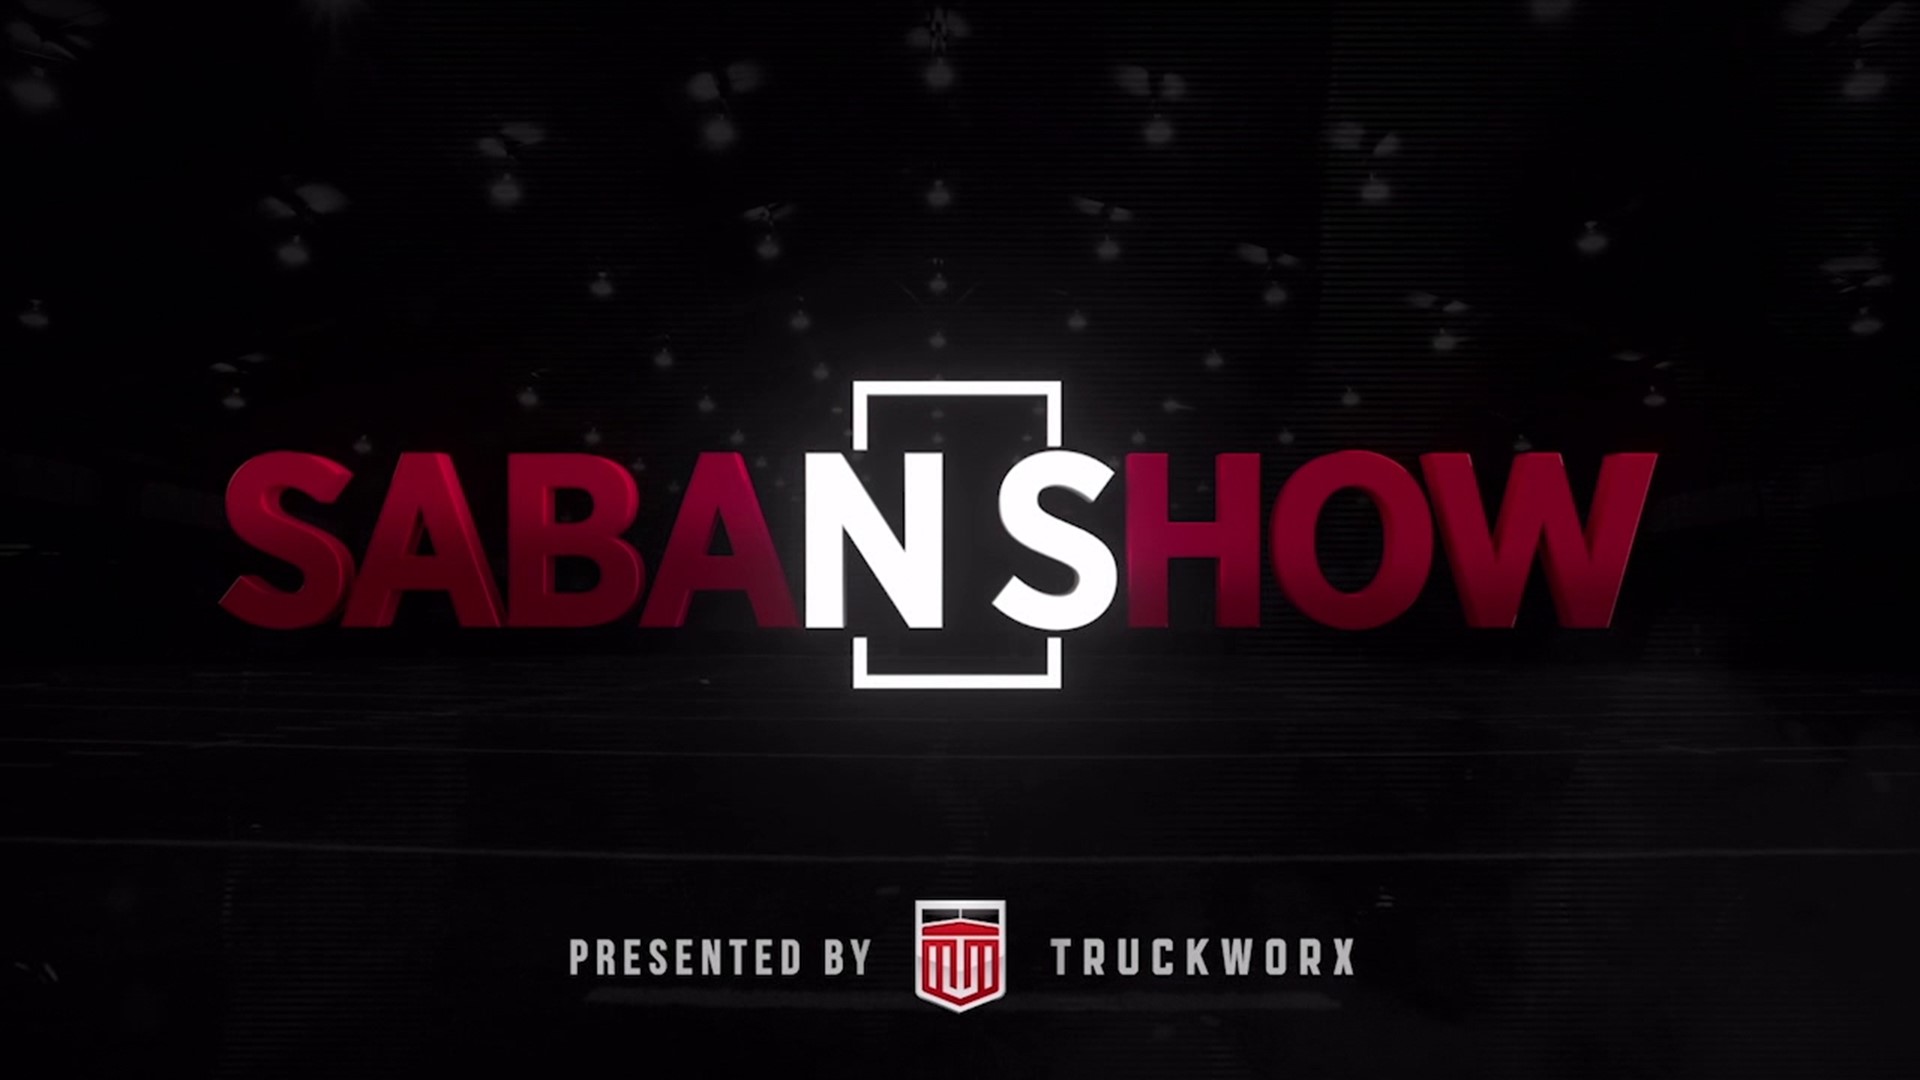 Saban Show on FOX54+ presented by Truckworx